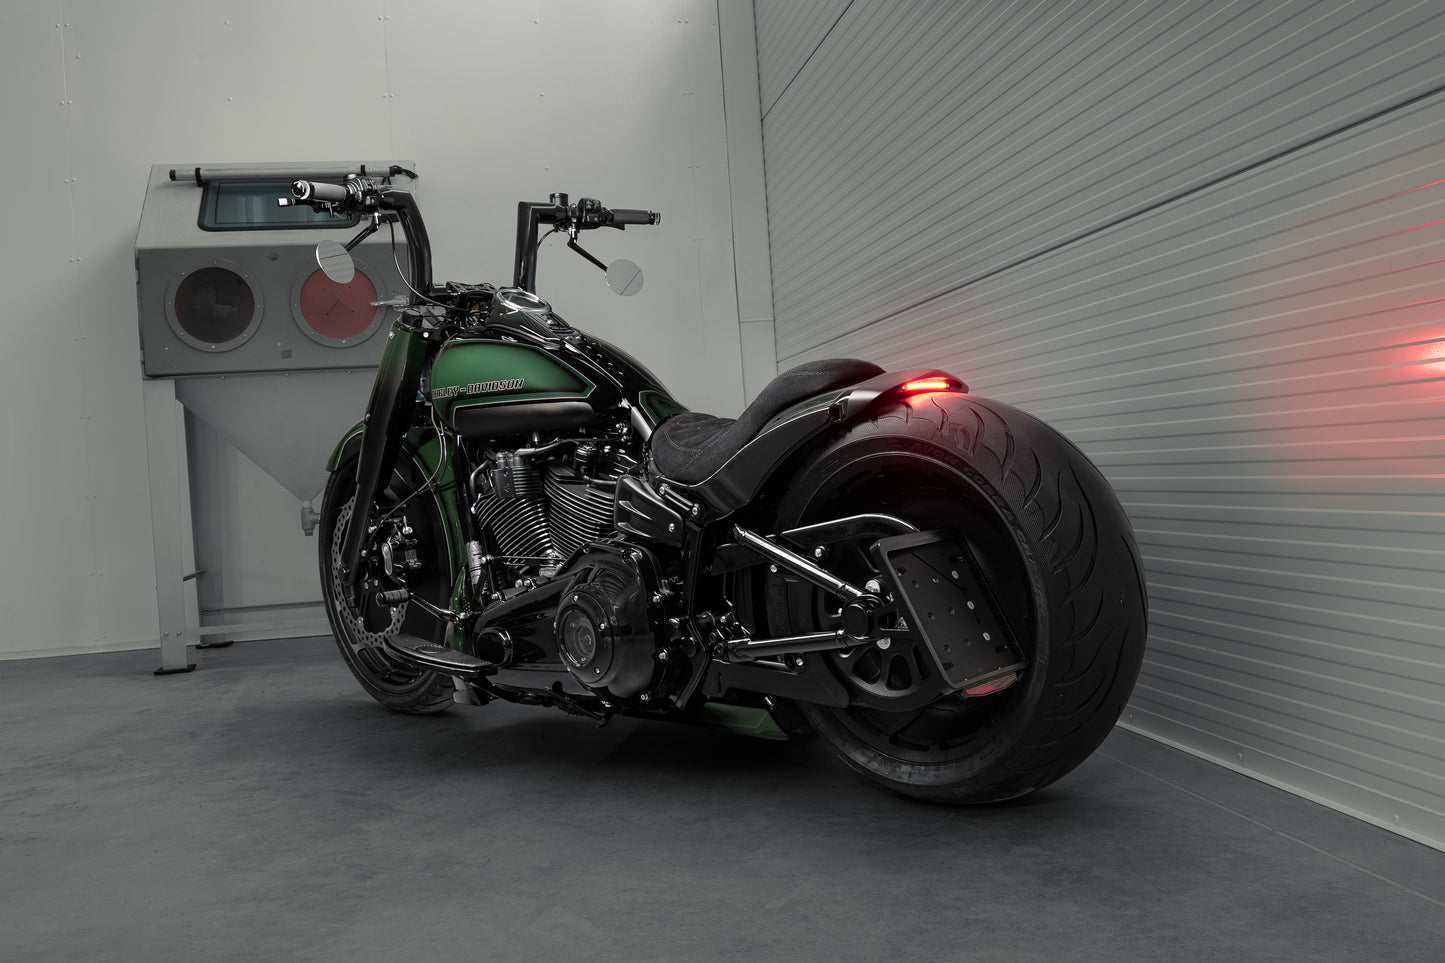  Harley Davidson motorcycle with Killer Custom "Avenger" rear fender kit from the rear in a modern garage